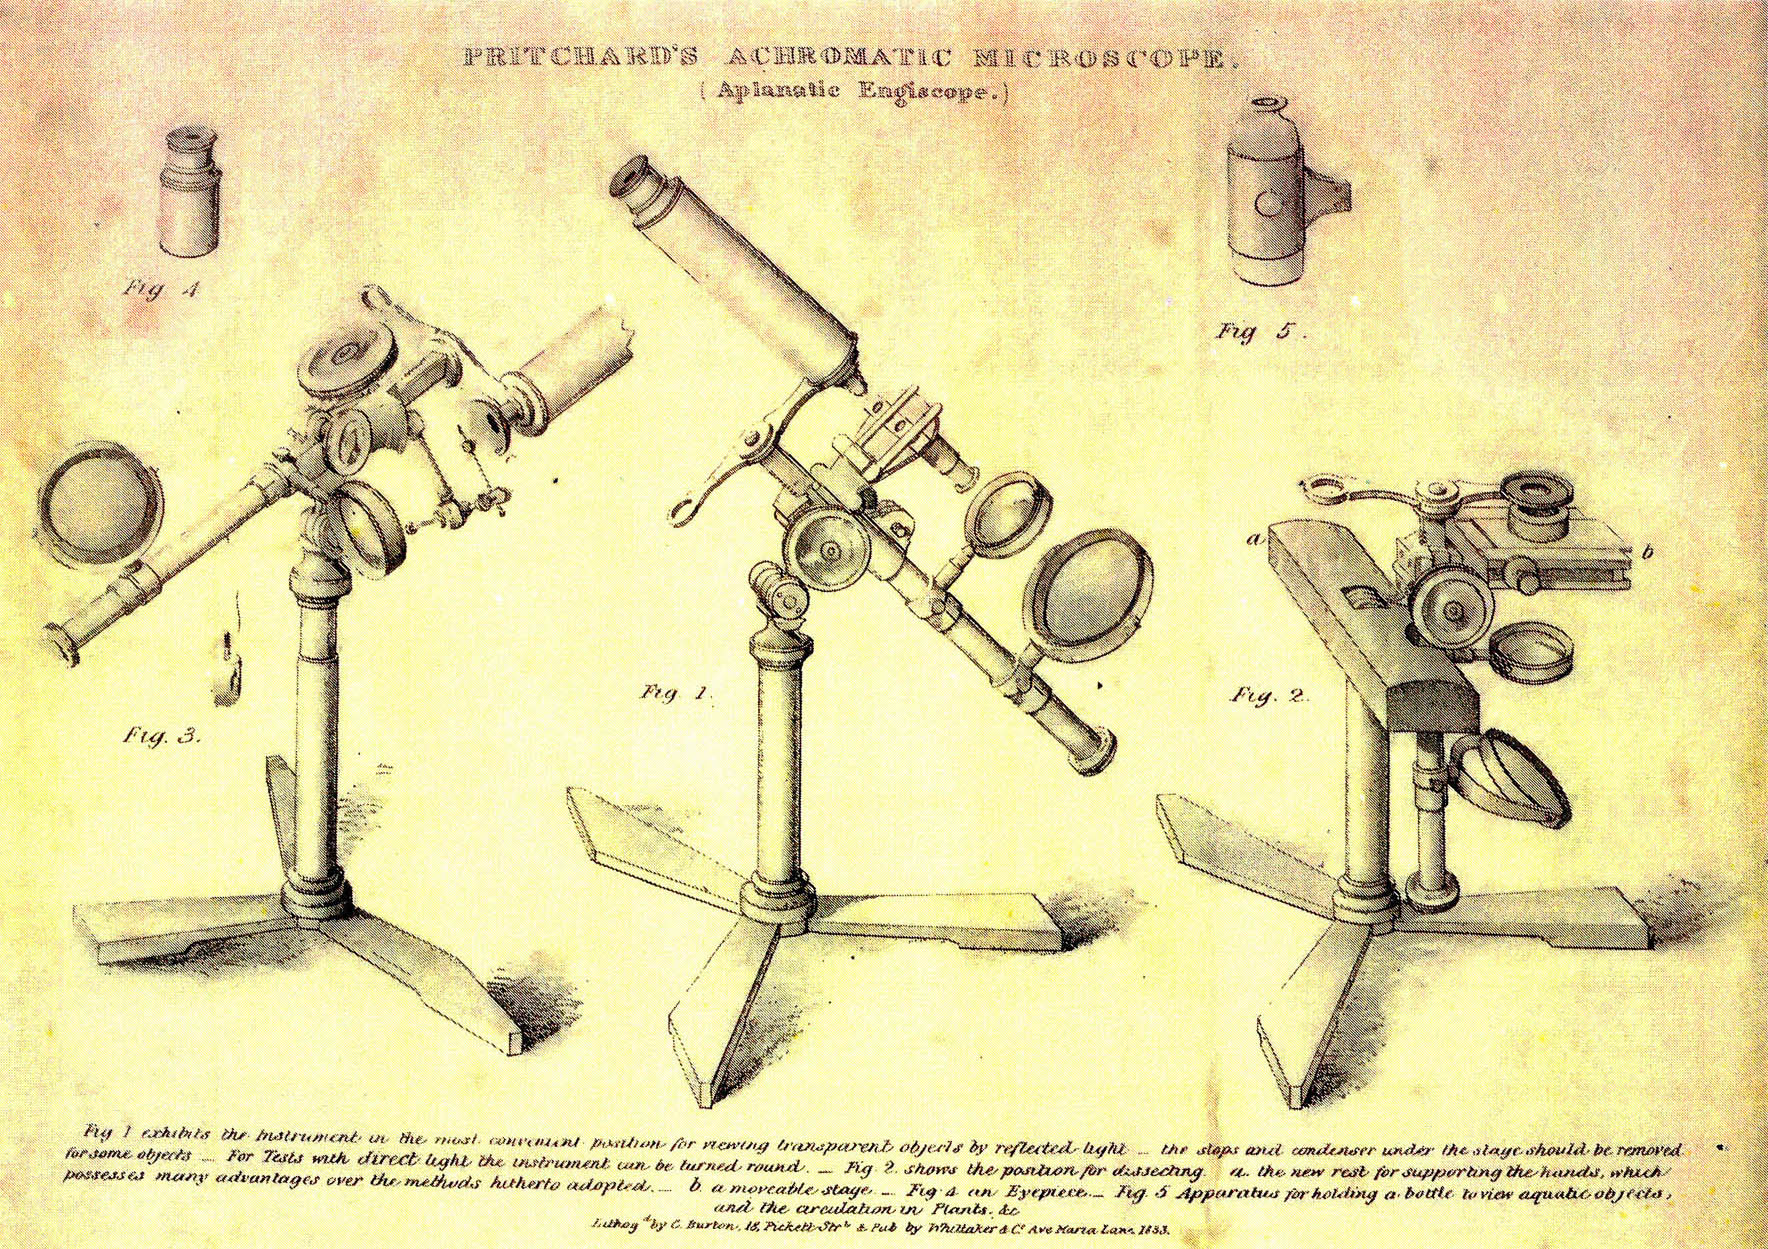 Pritchard's Aplanatic Engiscope